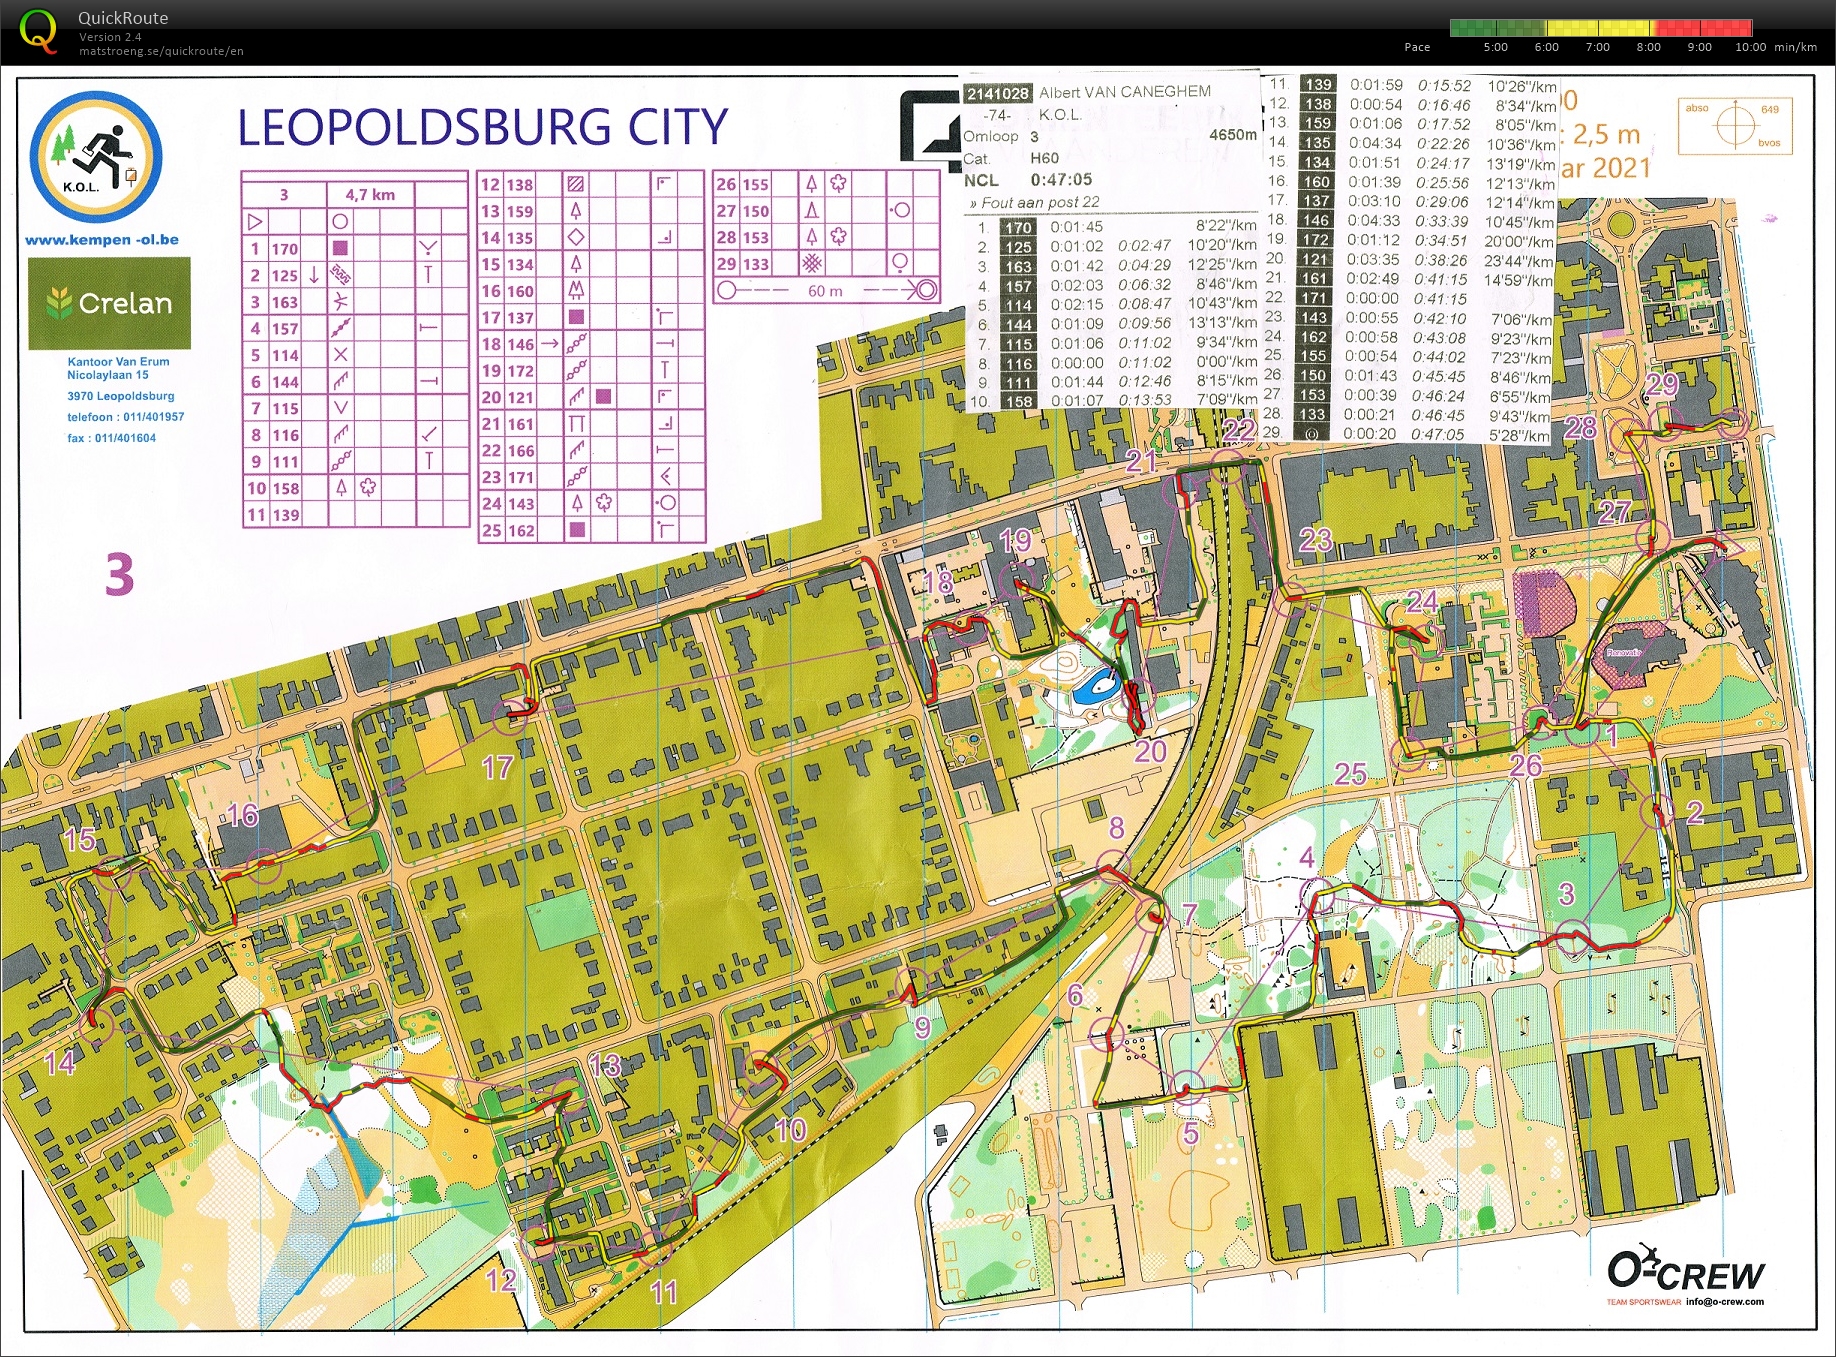 Leopoldsburg City (06/06/2021)